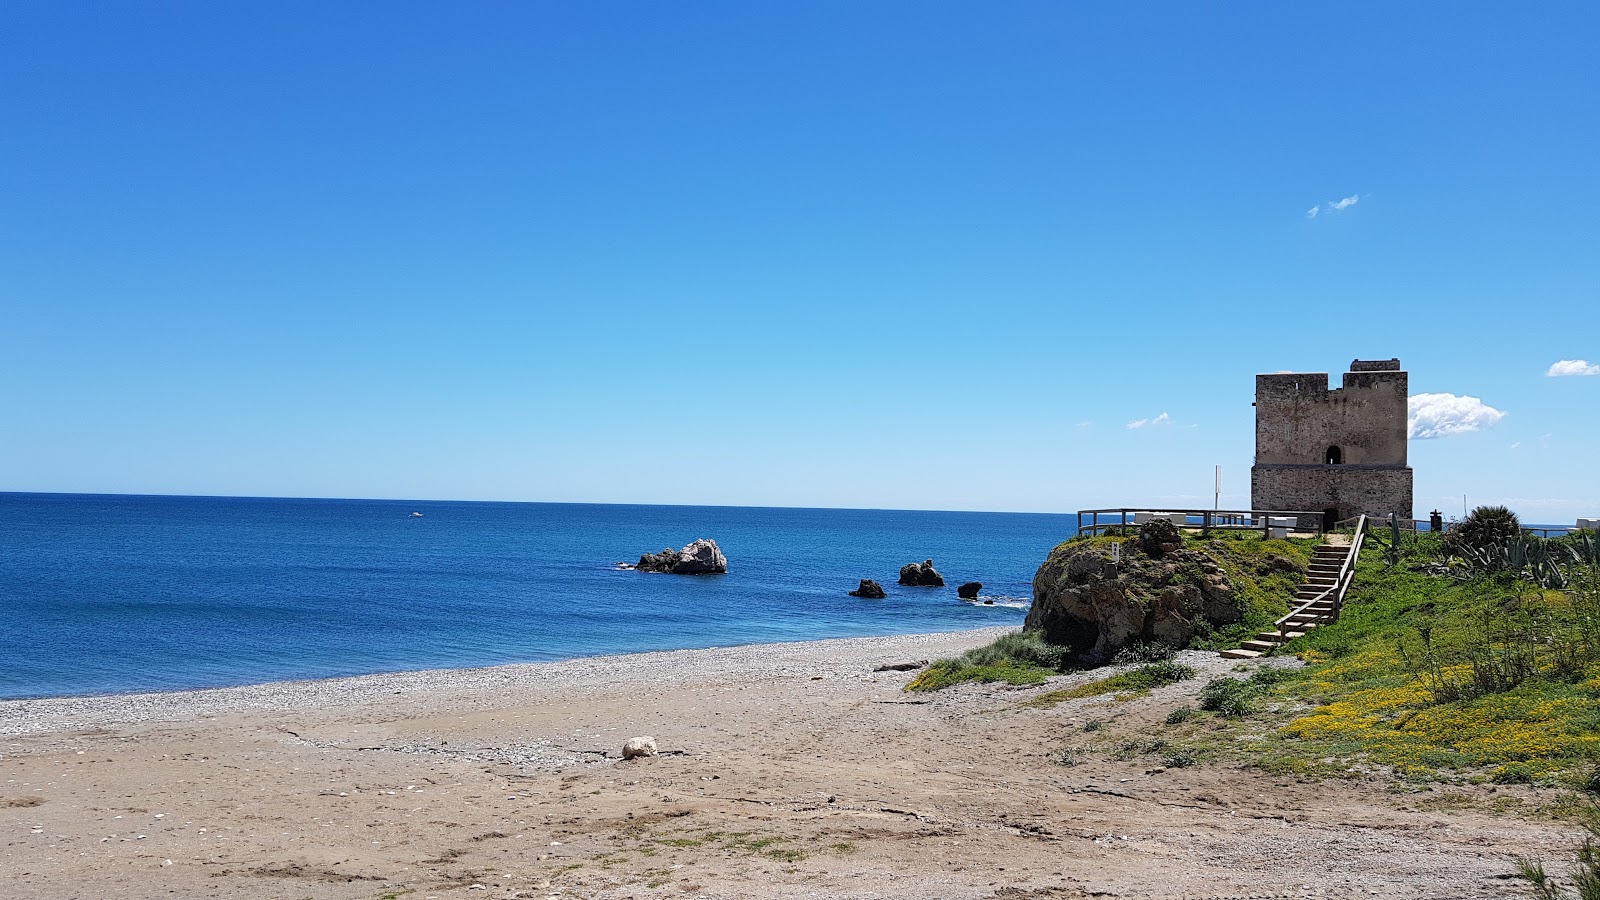 Foto von Playa de las Piedras de la Paloma mit grauer sand Oberfläche